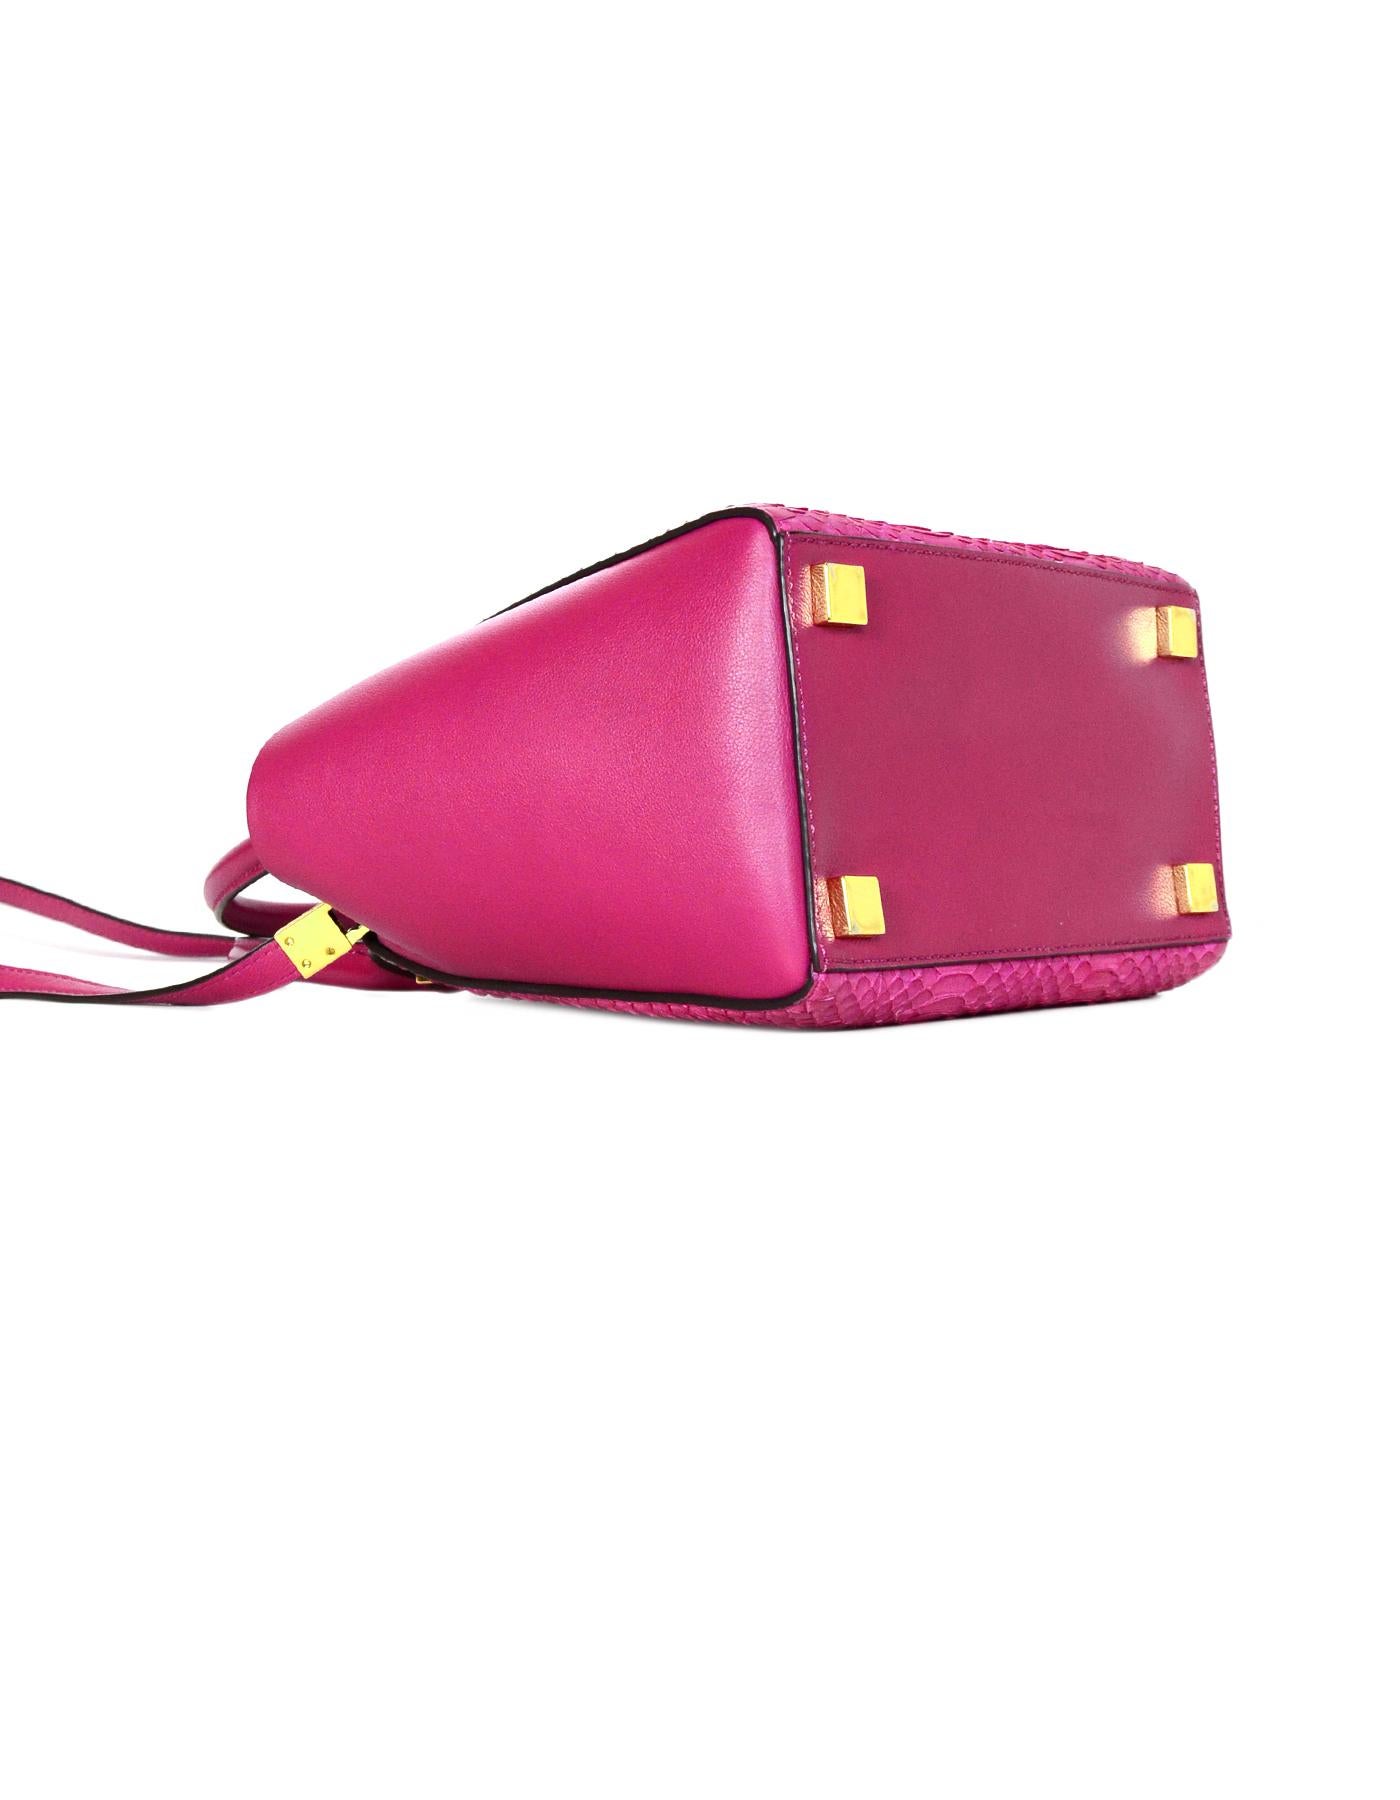 Michael Kors Pink Leather/Python Extra Small Miranda Crossbody Bag 1